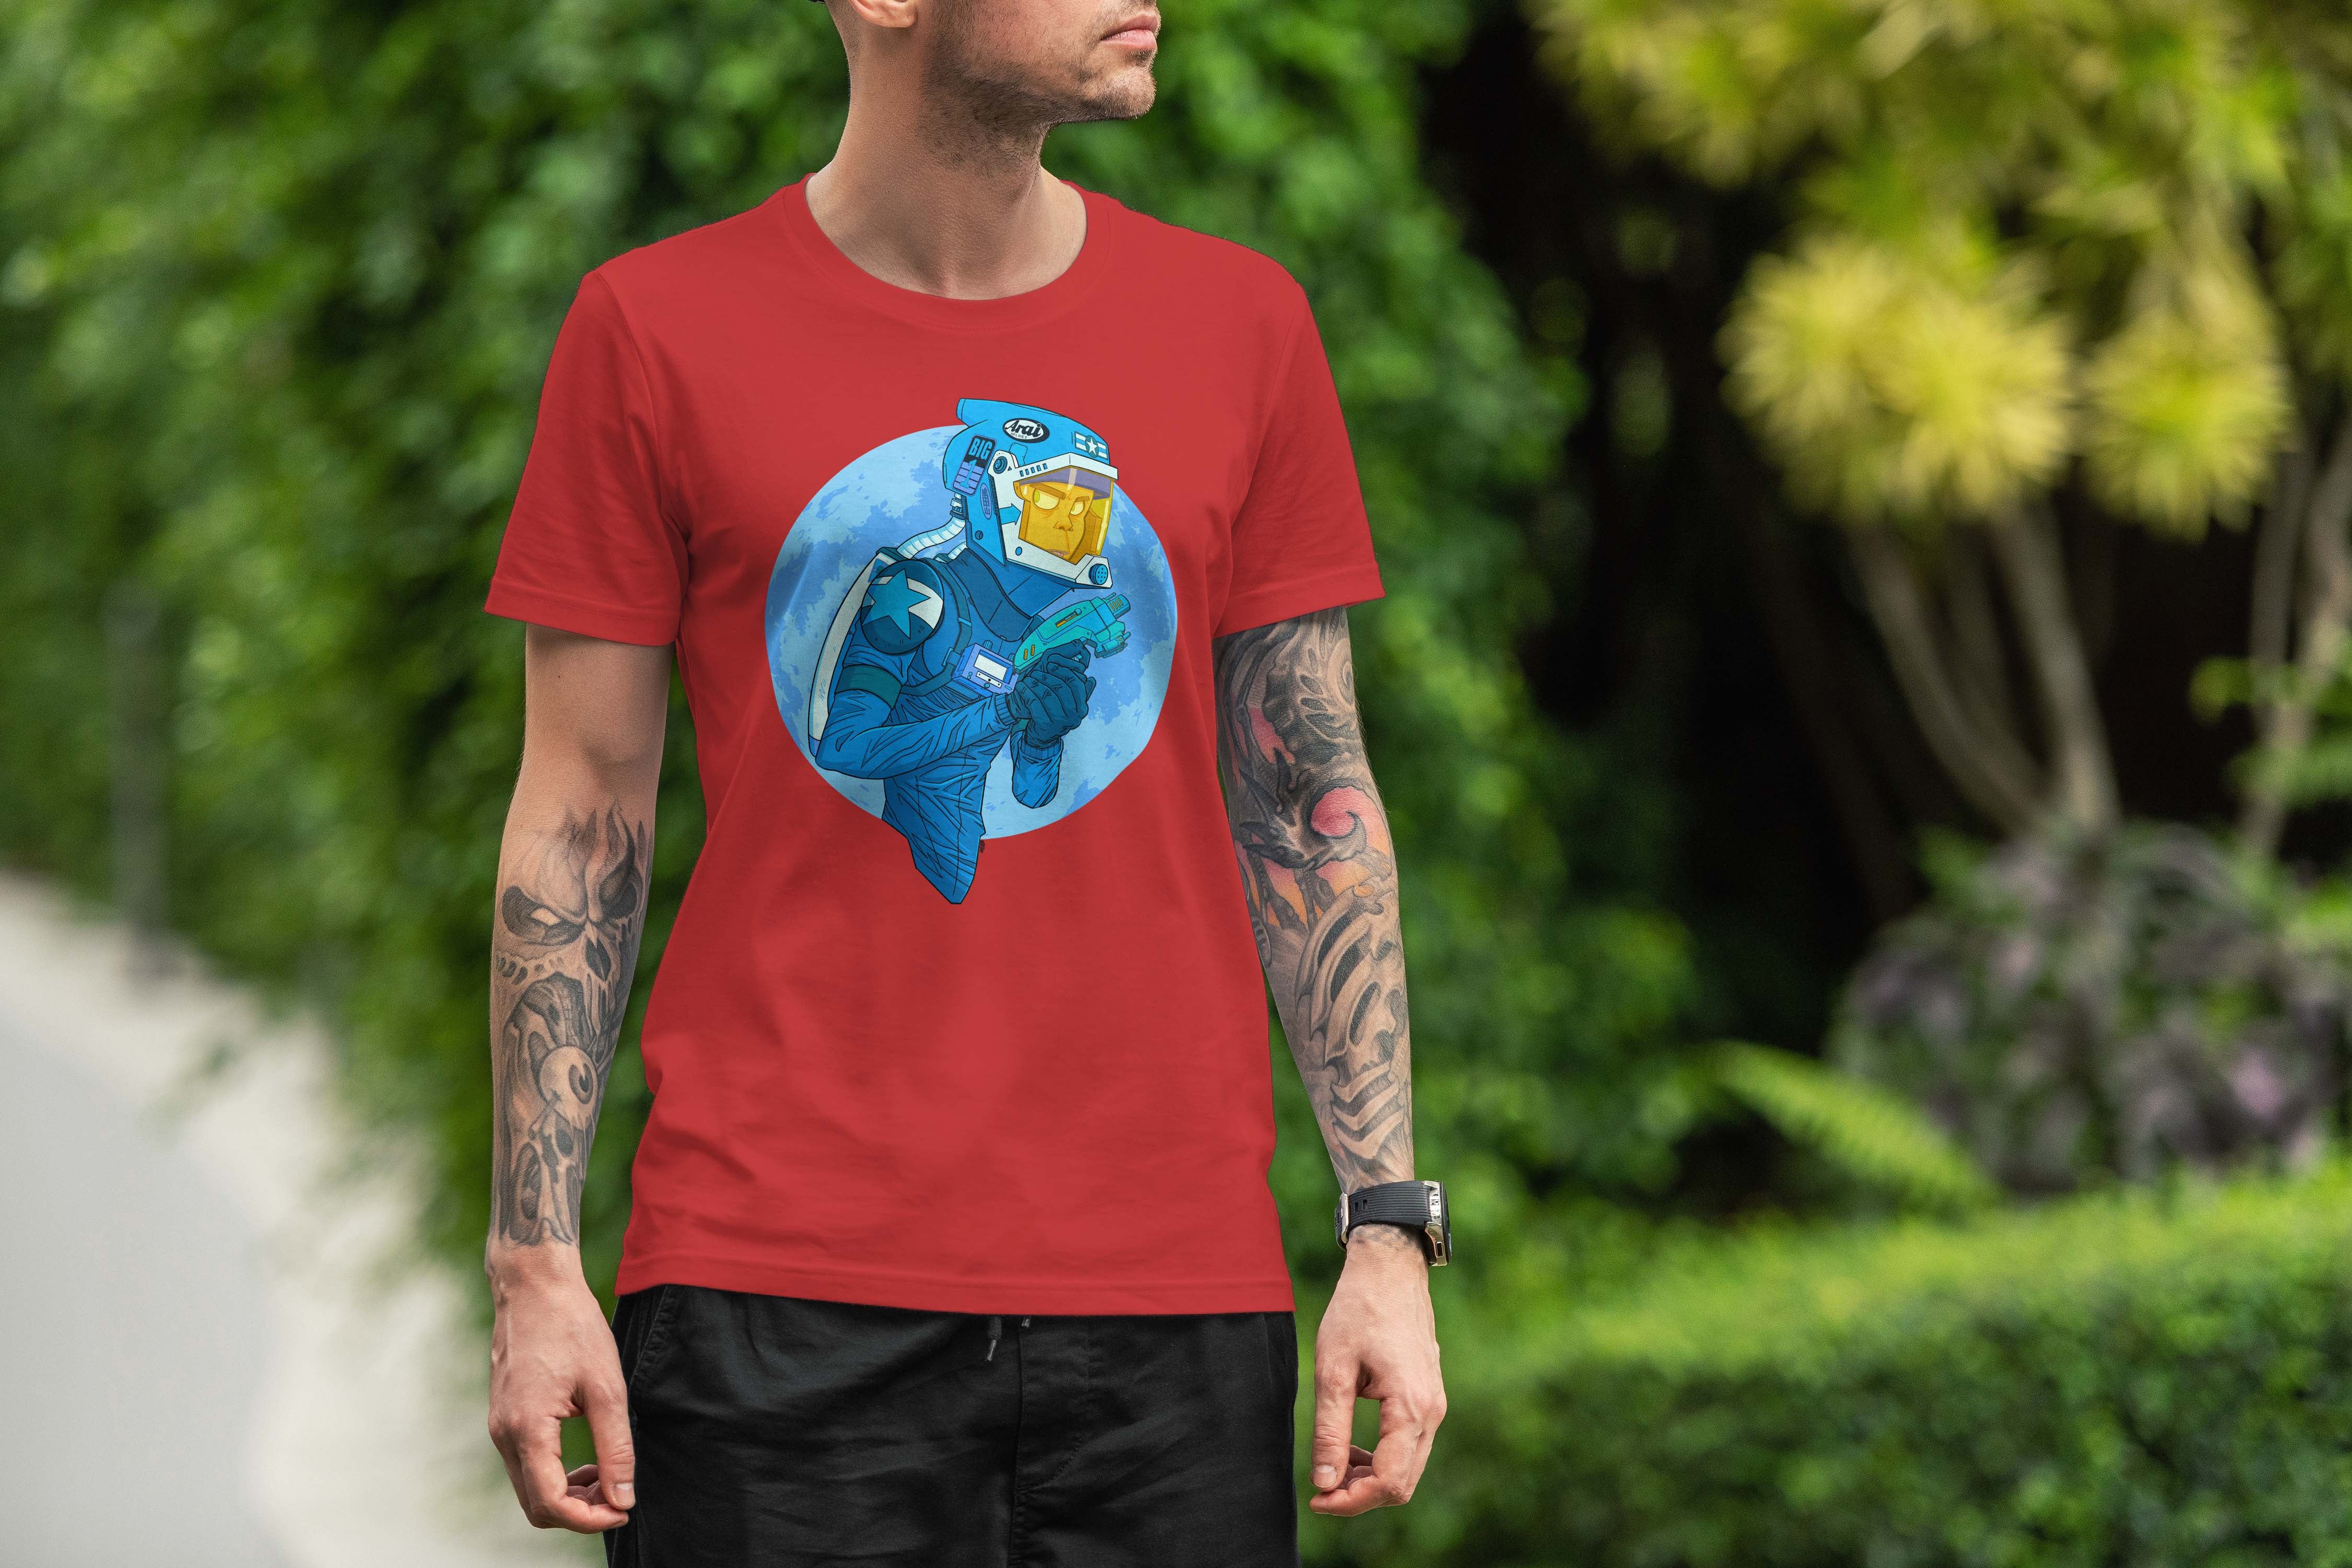 Unique and cool Gorillaz-style retro sci-fi T-Shirt illustration